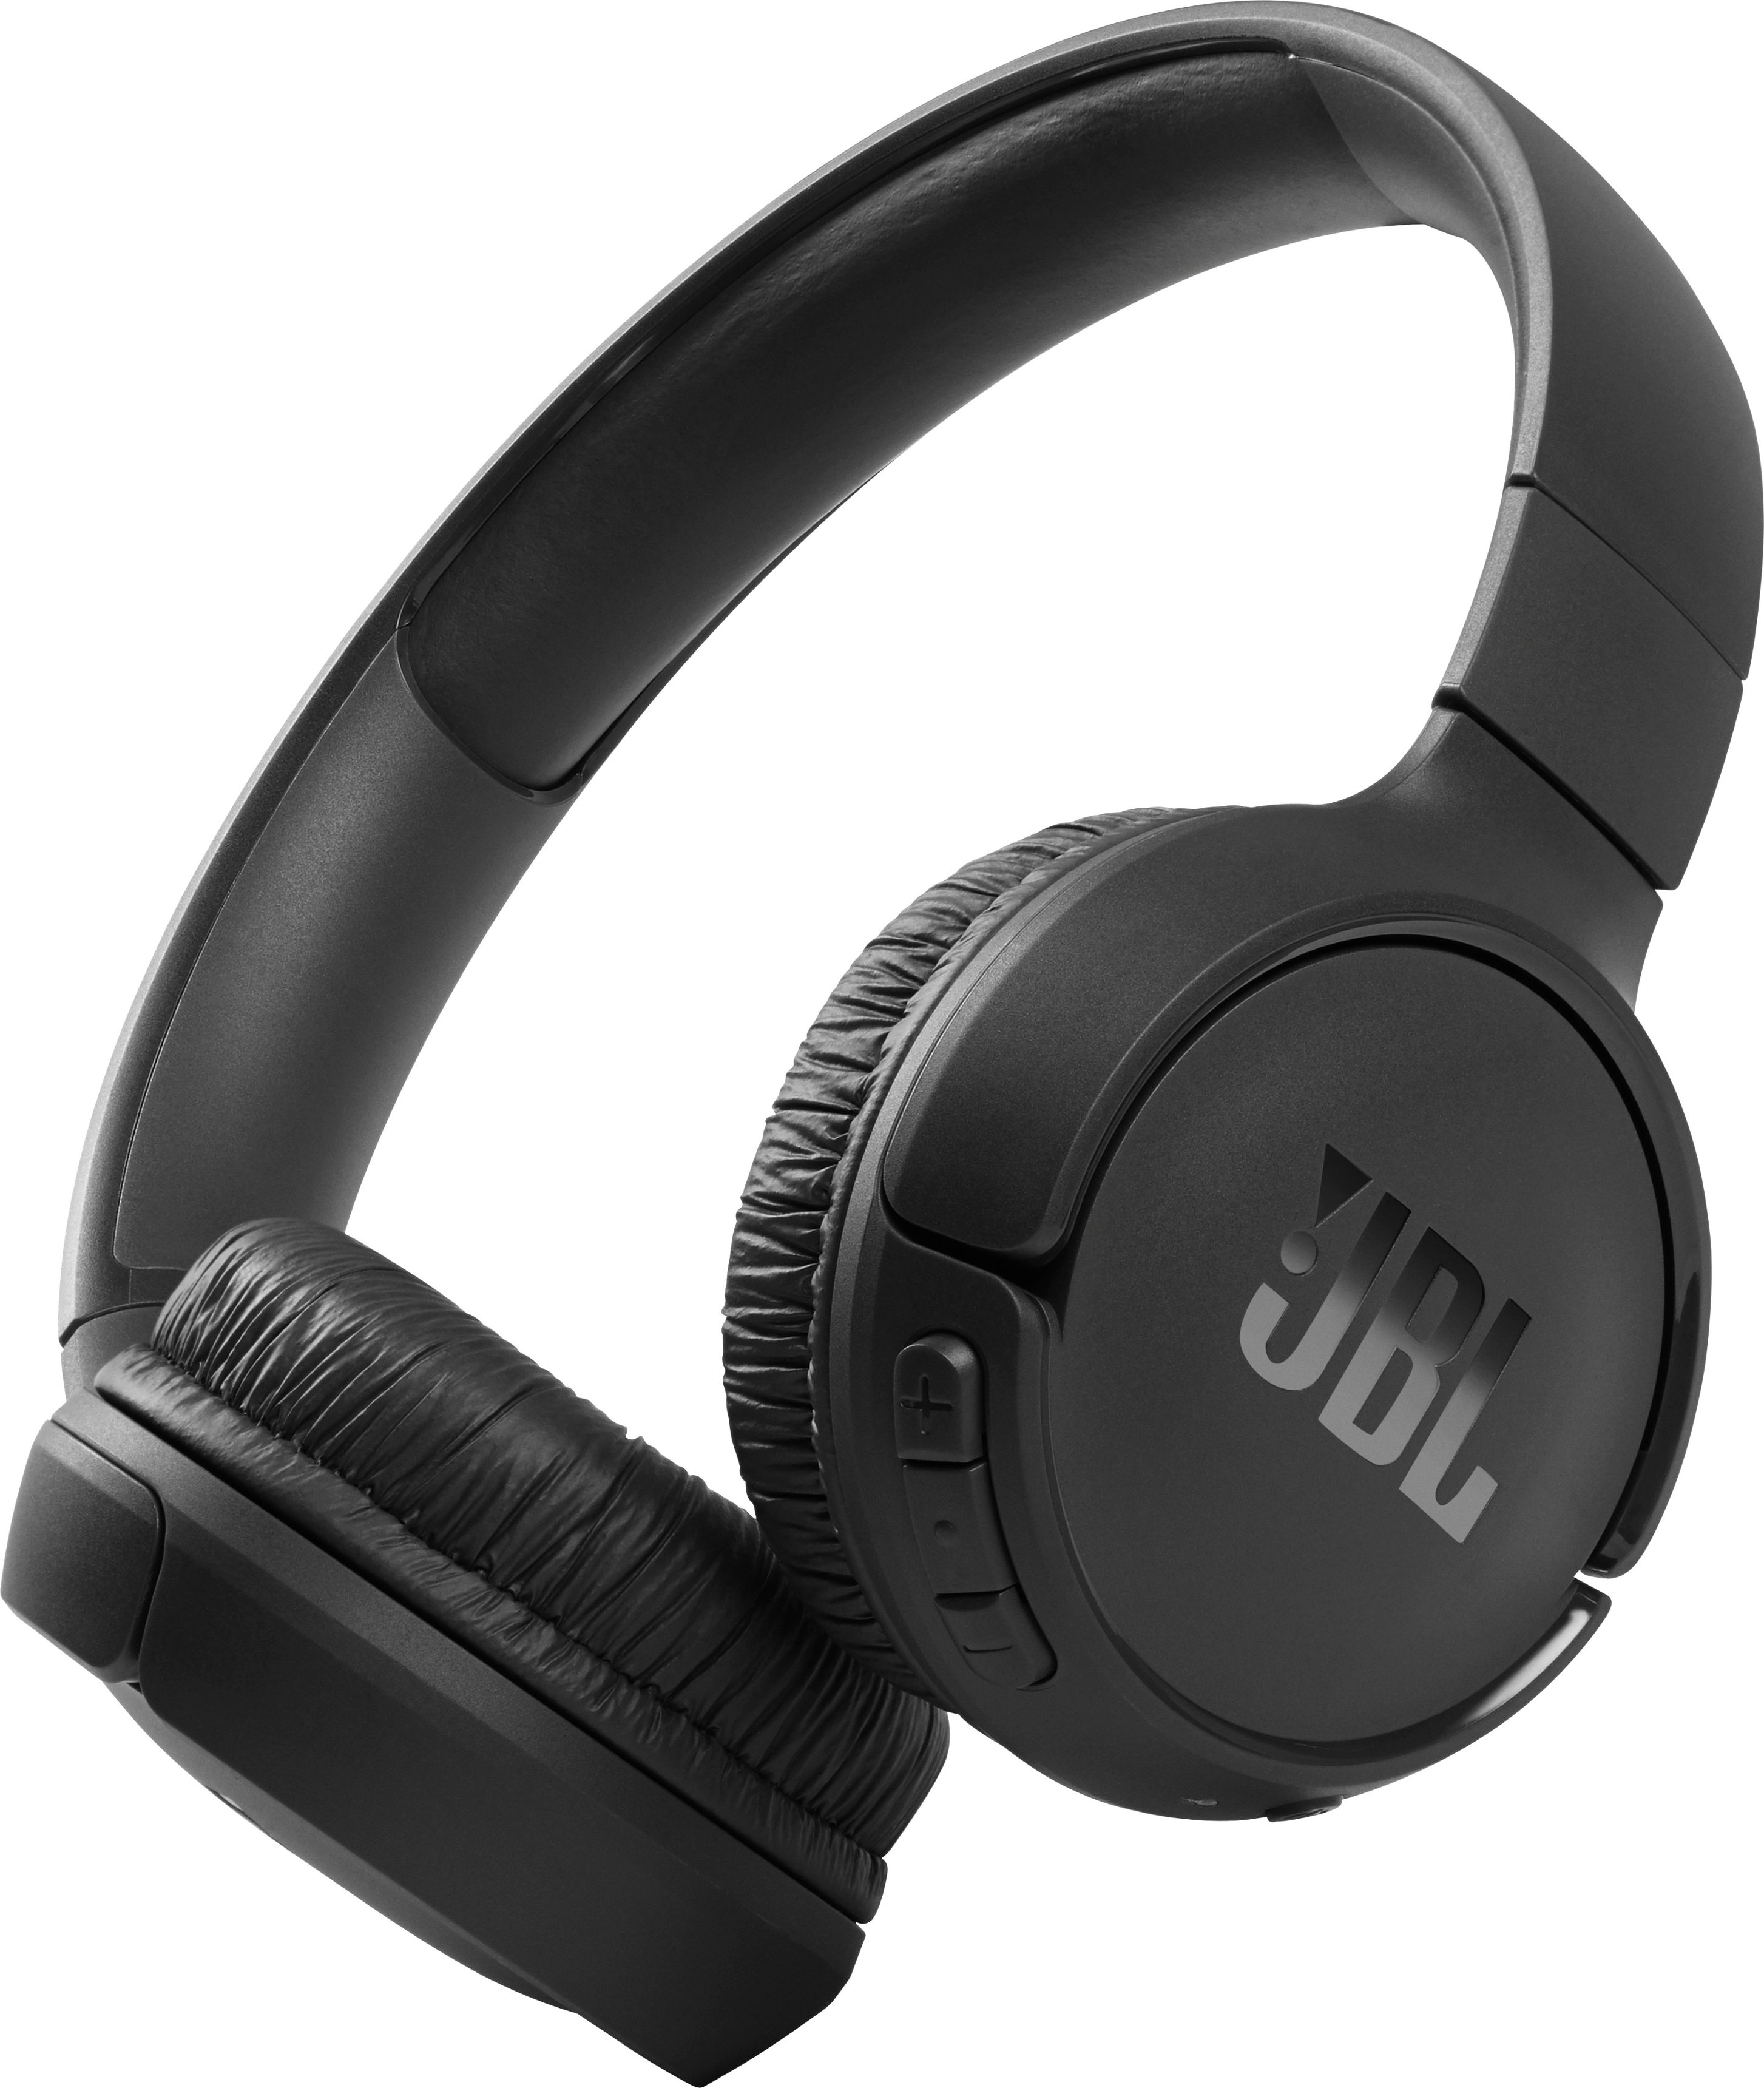 Angle View: JBL - Reflect Mini 2 Wireless In-Ear Headphones - Blue